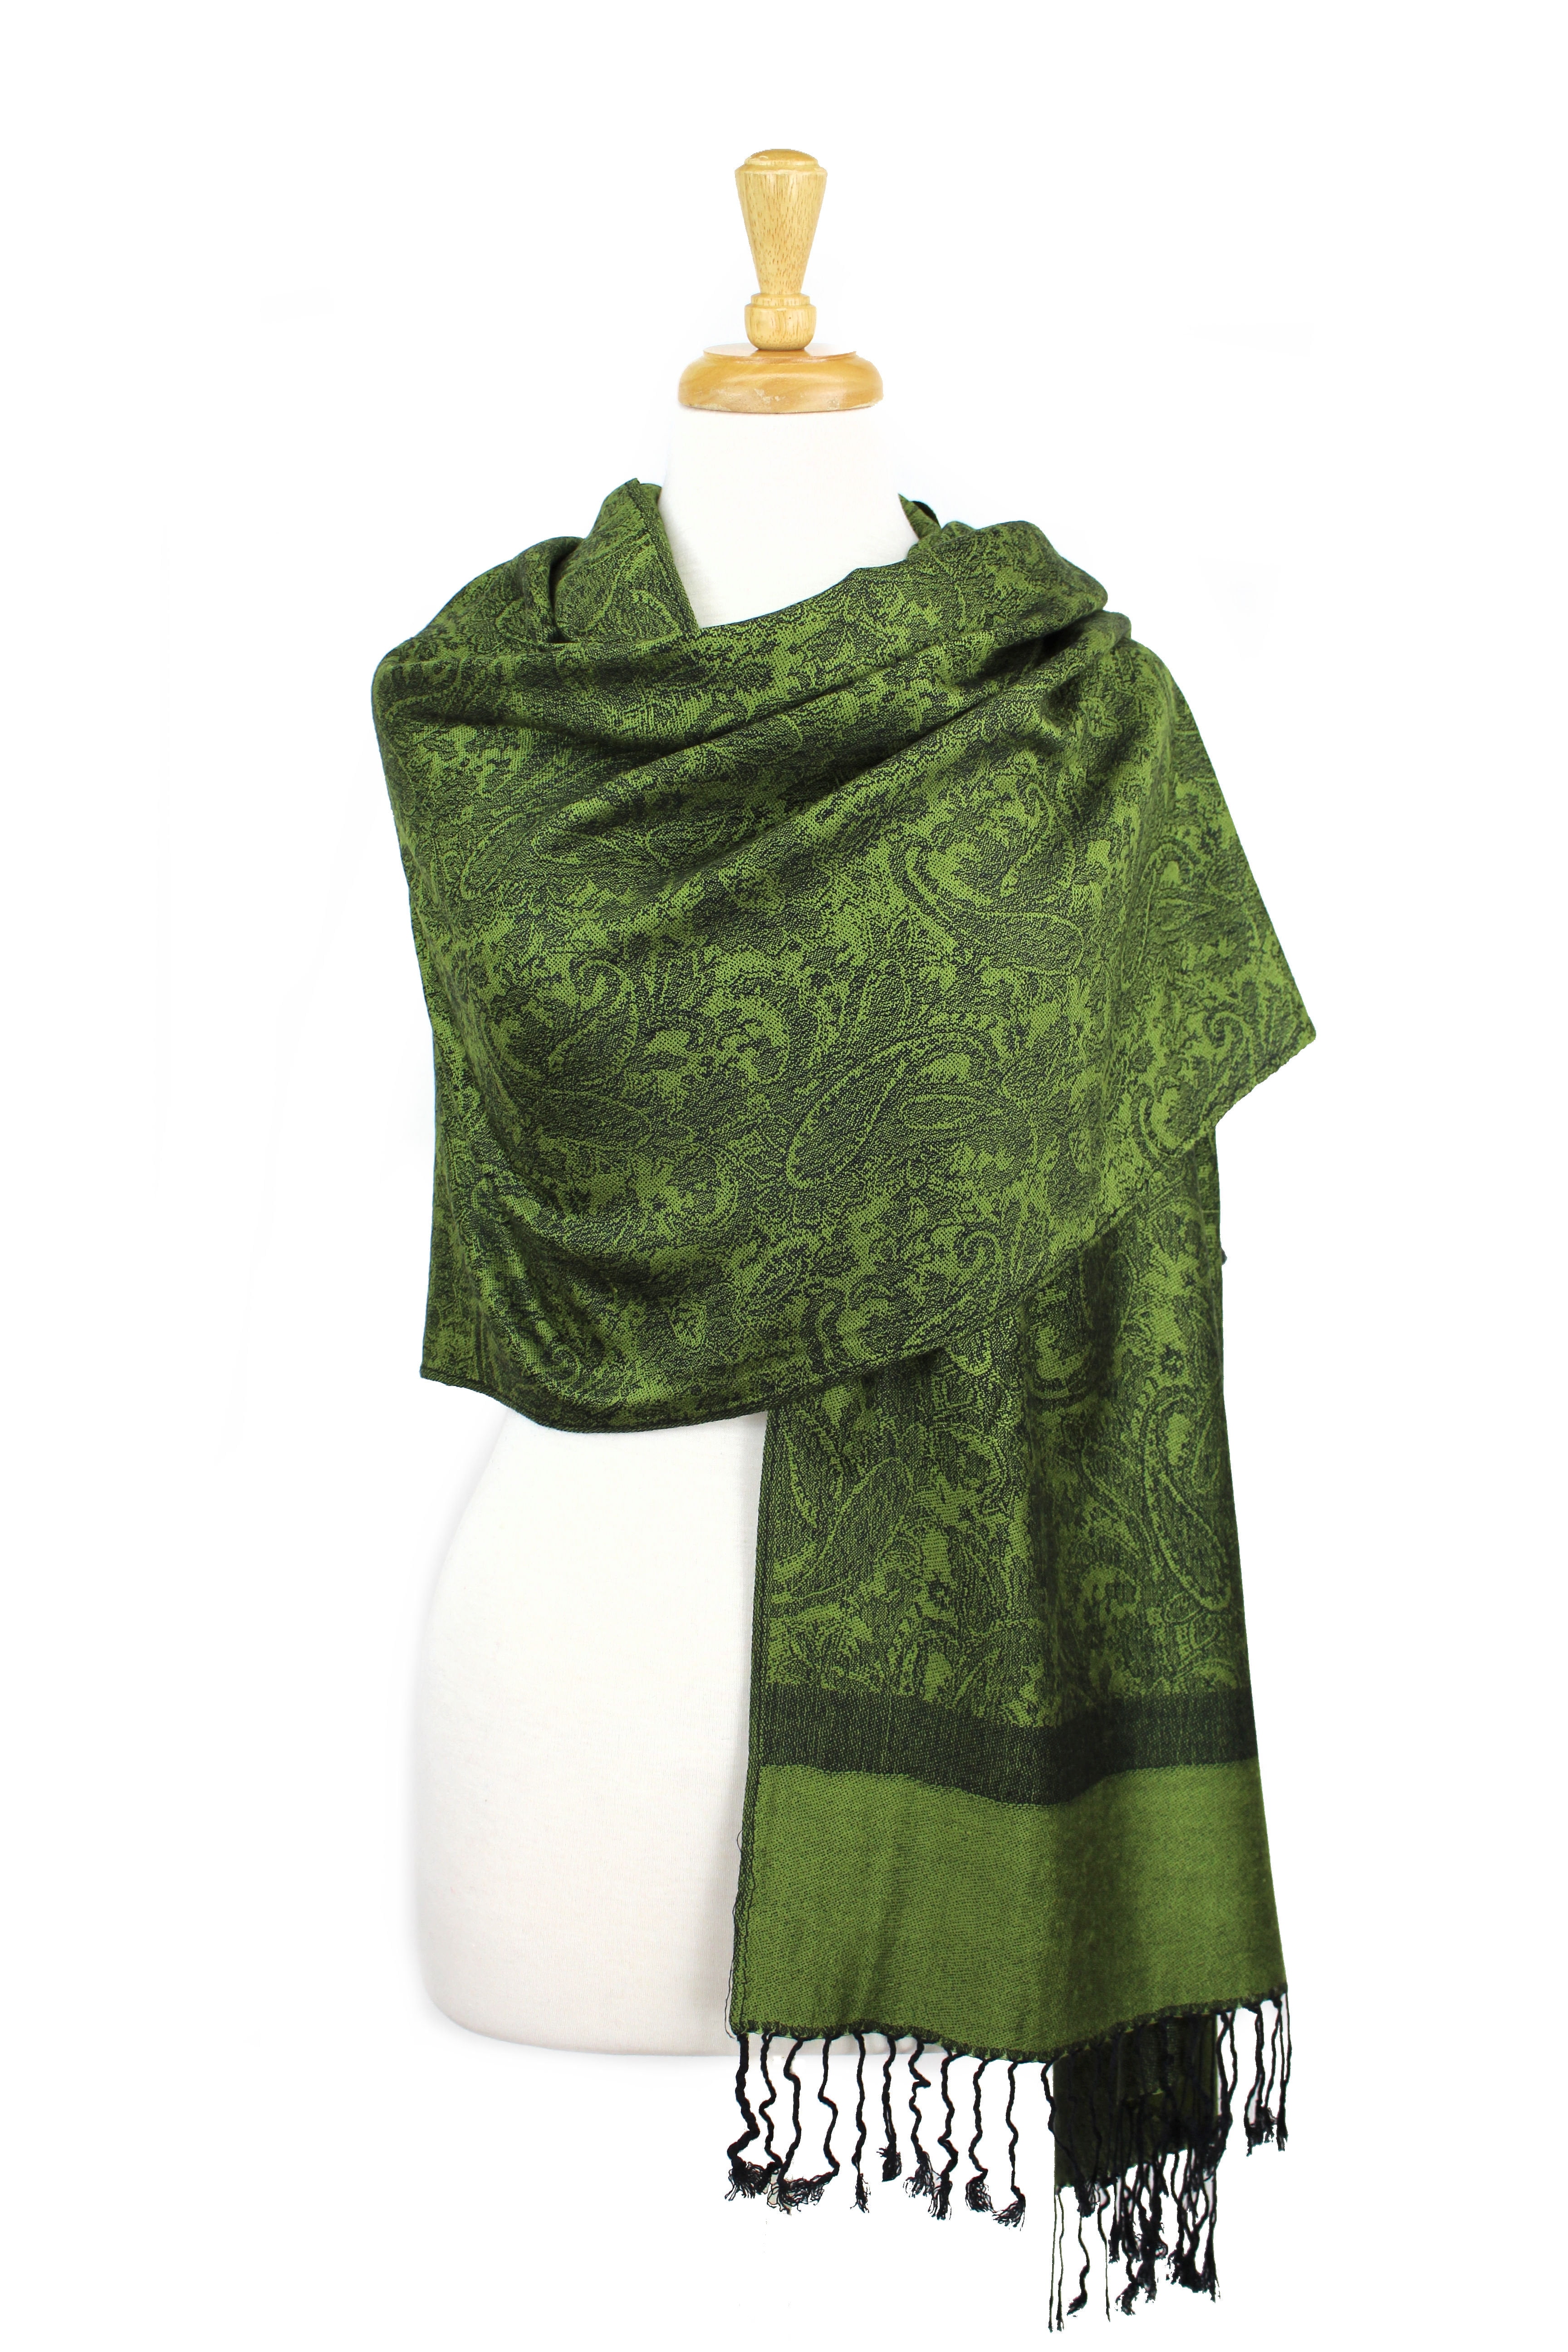 30pcs wholesale pashmina shawl scarf stole wrap $4.85 each 